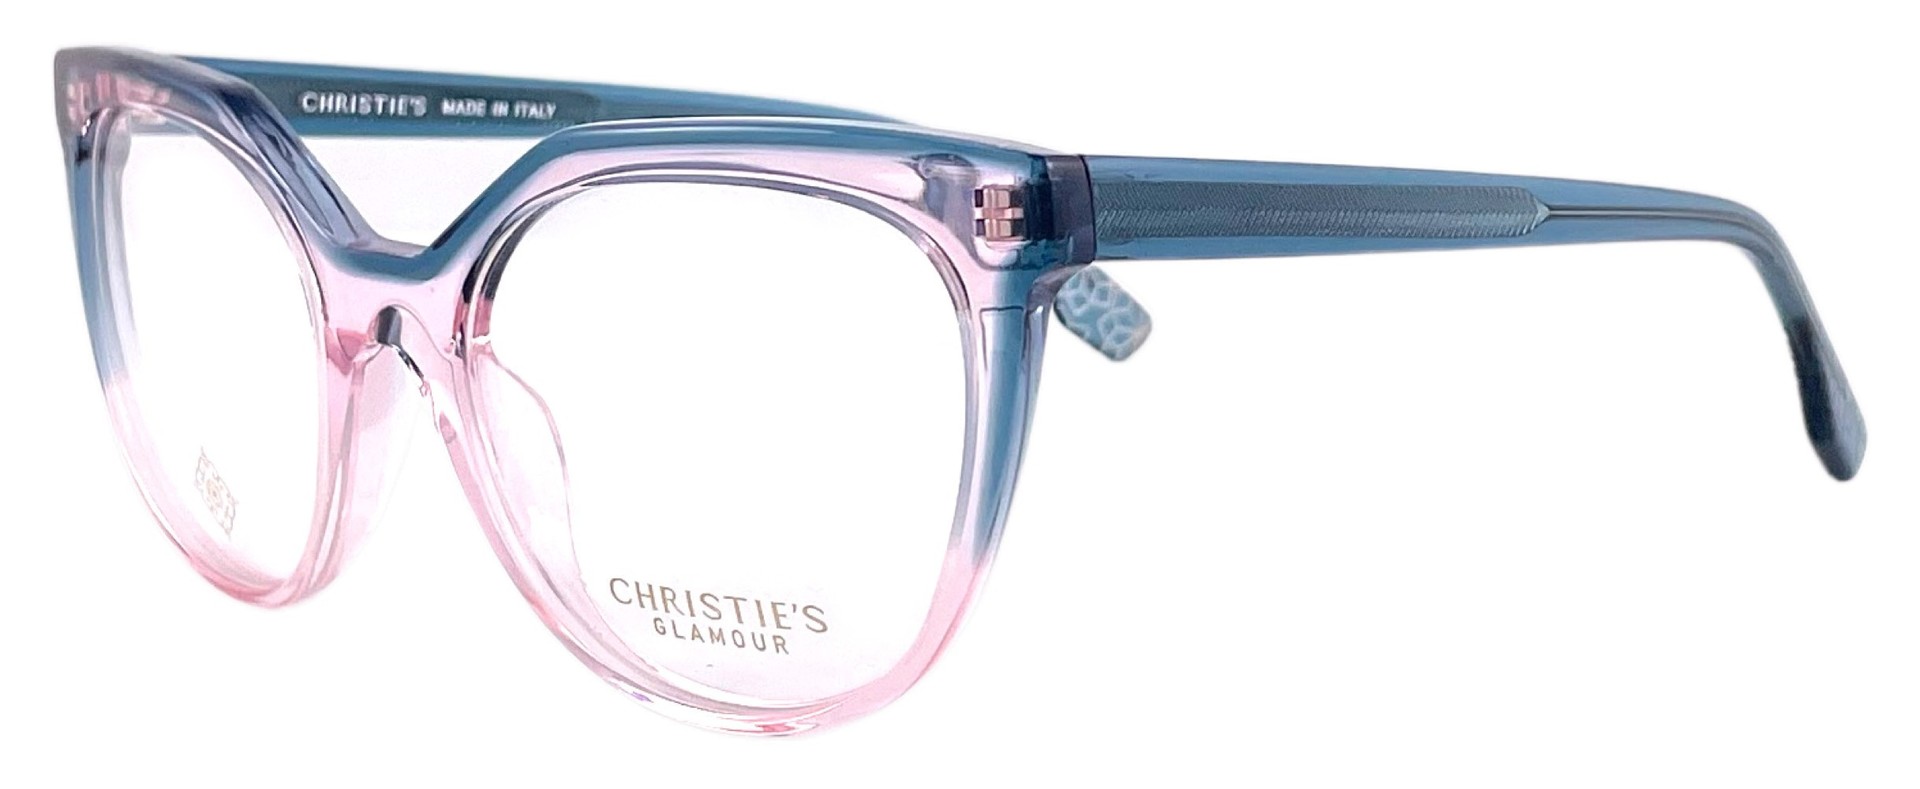 Christie's Glamour7 C207 2